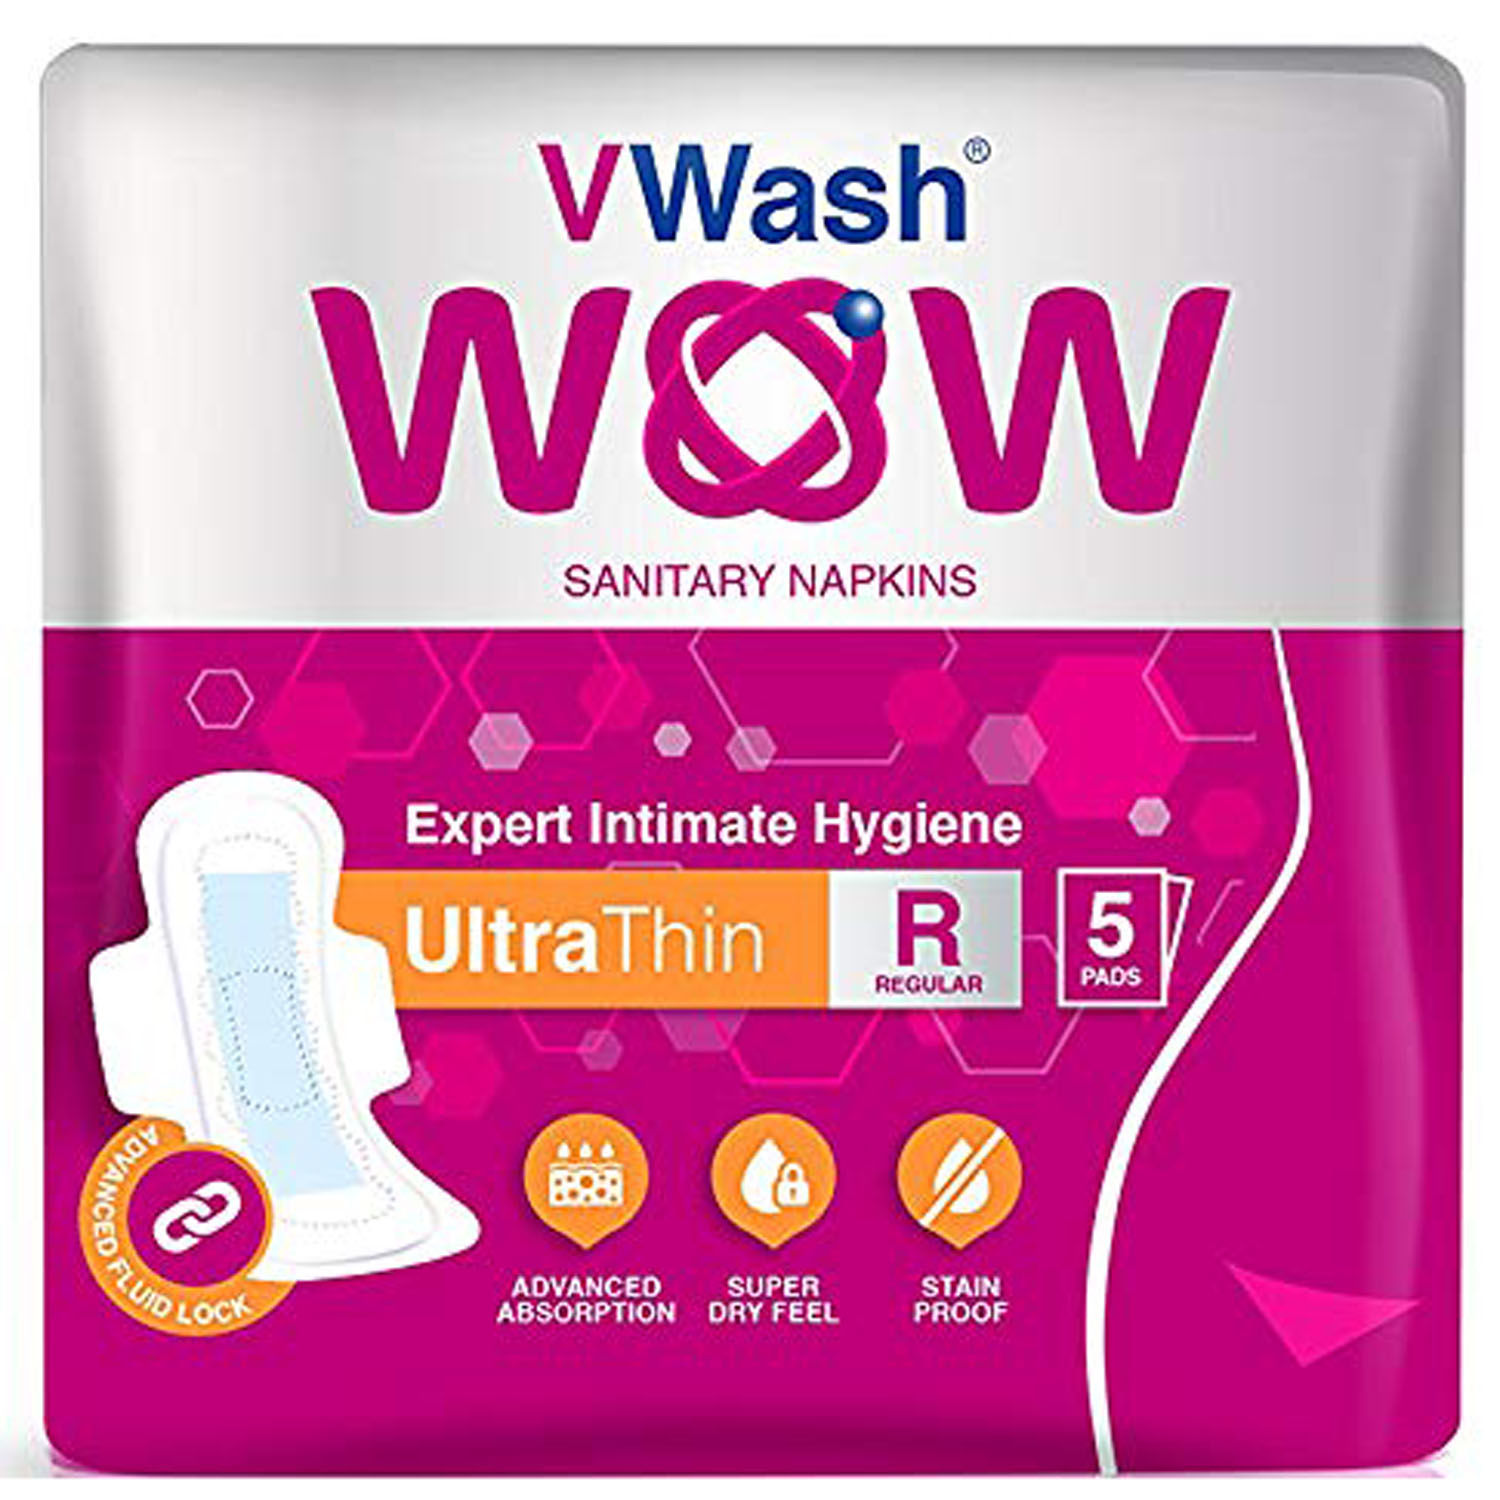 VWash Wow Ultra Thin Sanitary Napkins Regular, 5 Count, Pack of 1 